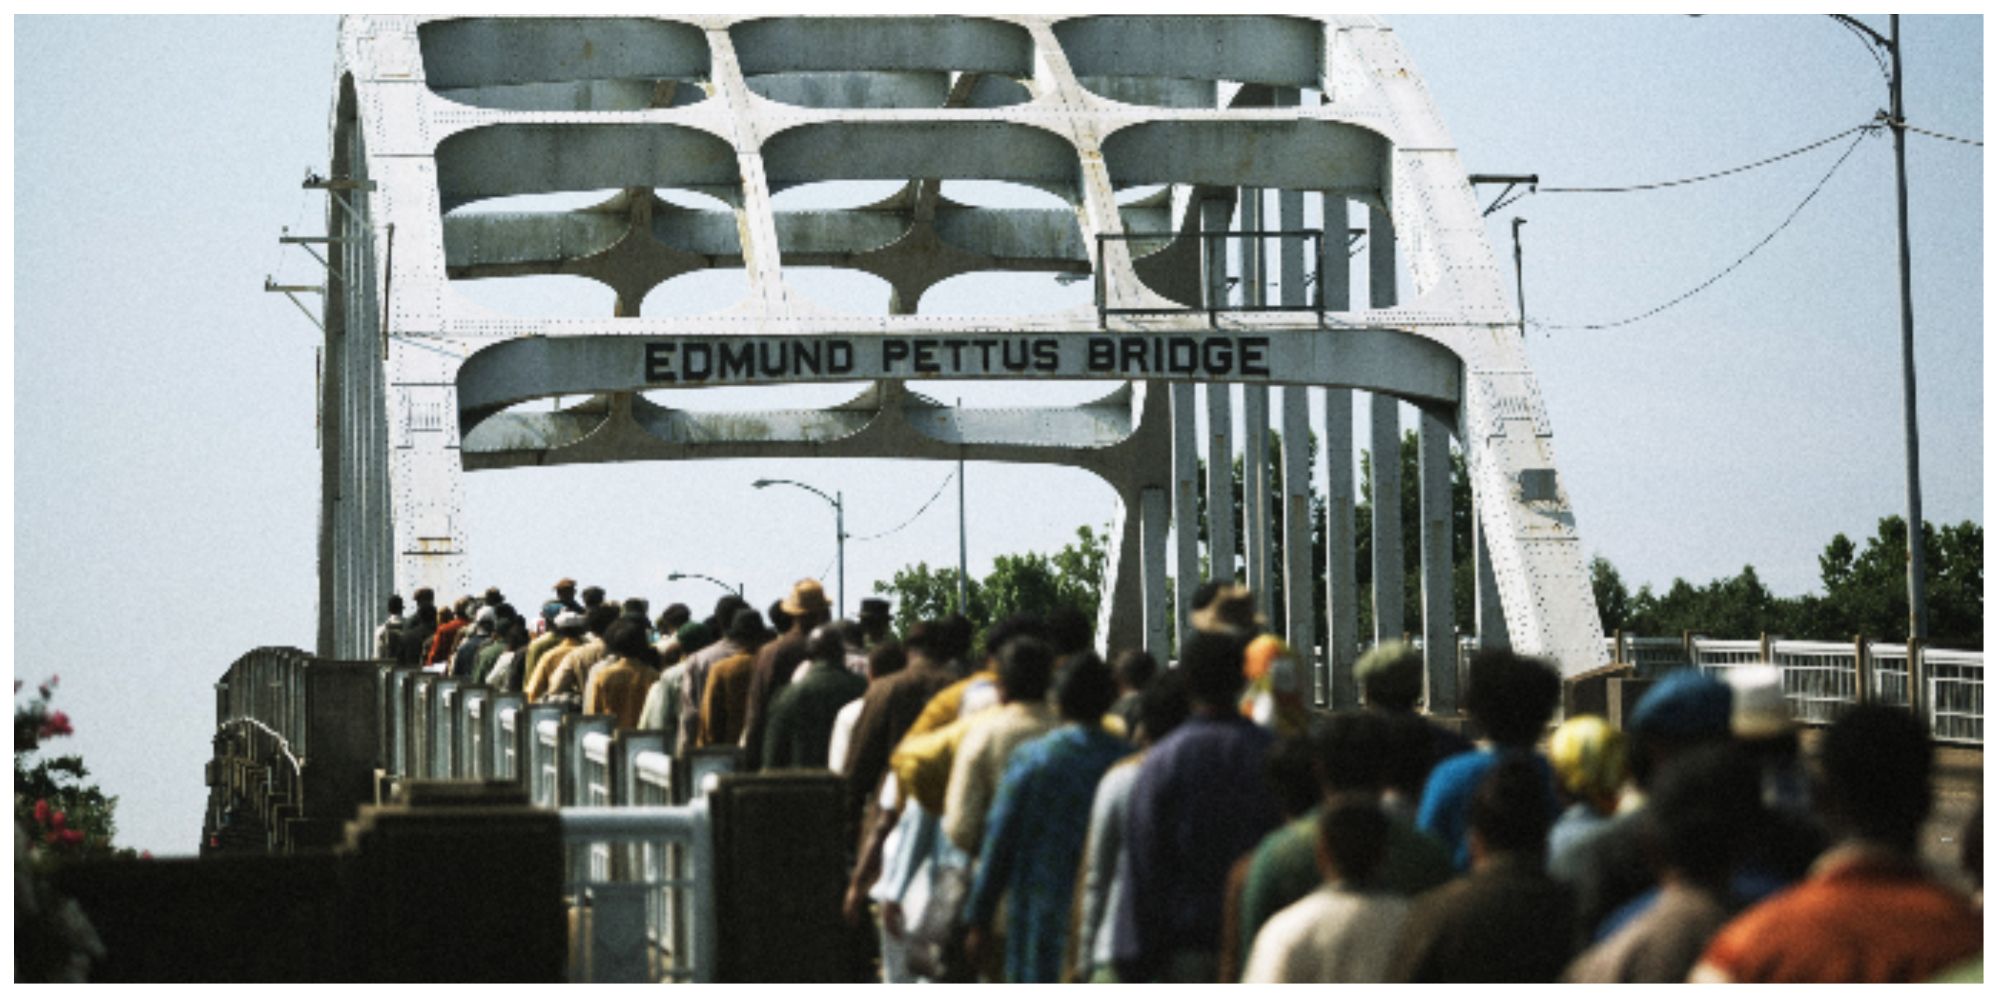 Citizens of Selma walking across the Edmund Pettus Bridge in the 2014 film